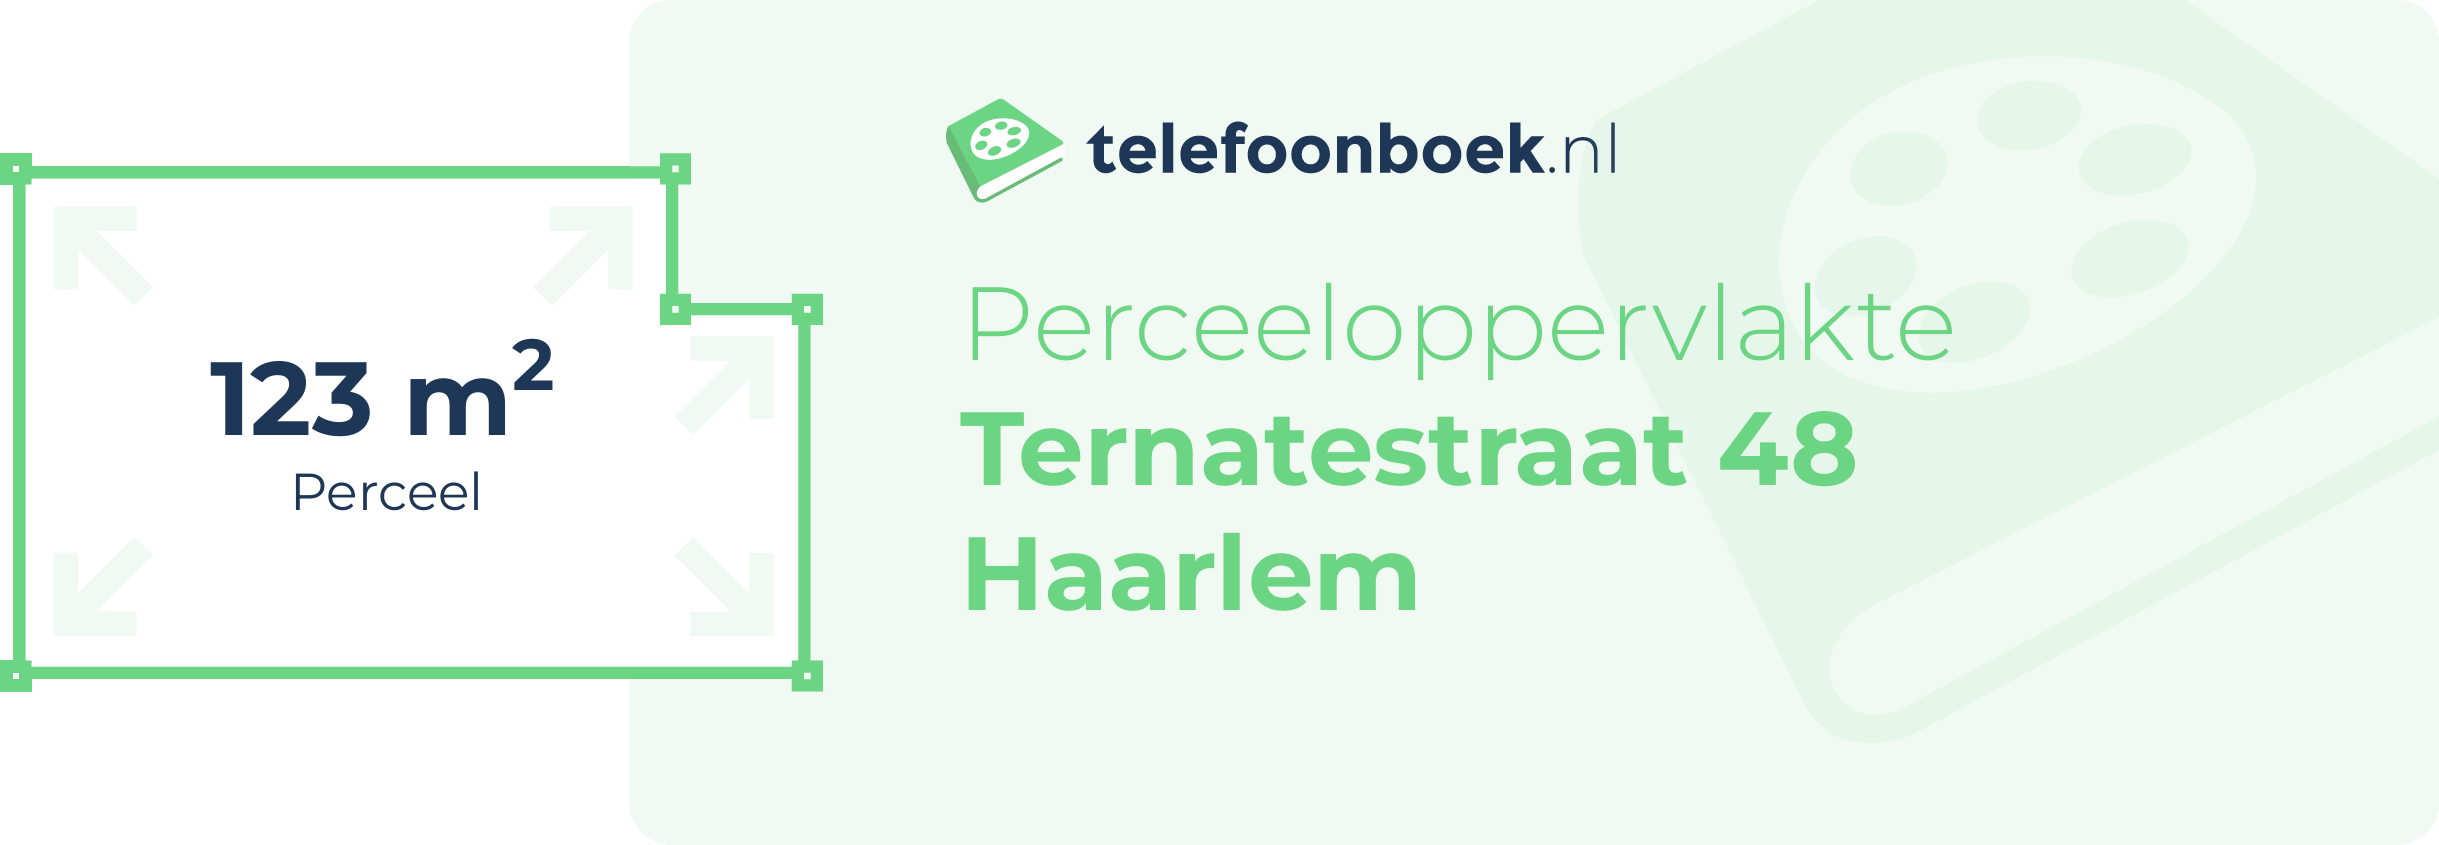 Perceeloppervlakte Ternatestraat 48 Haarlem